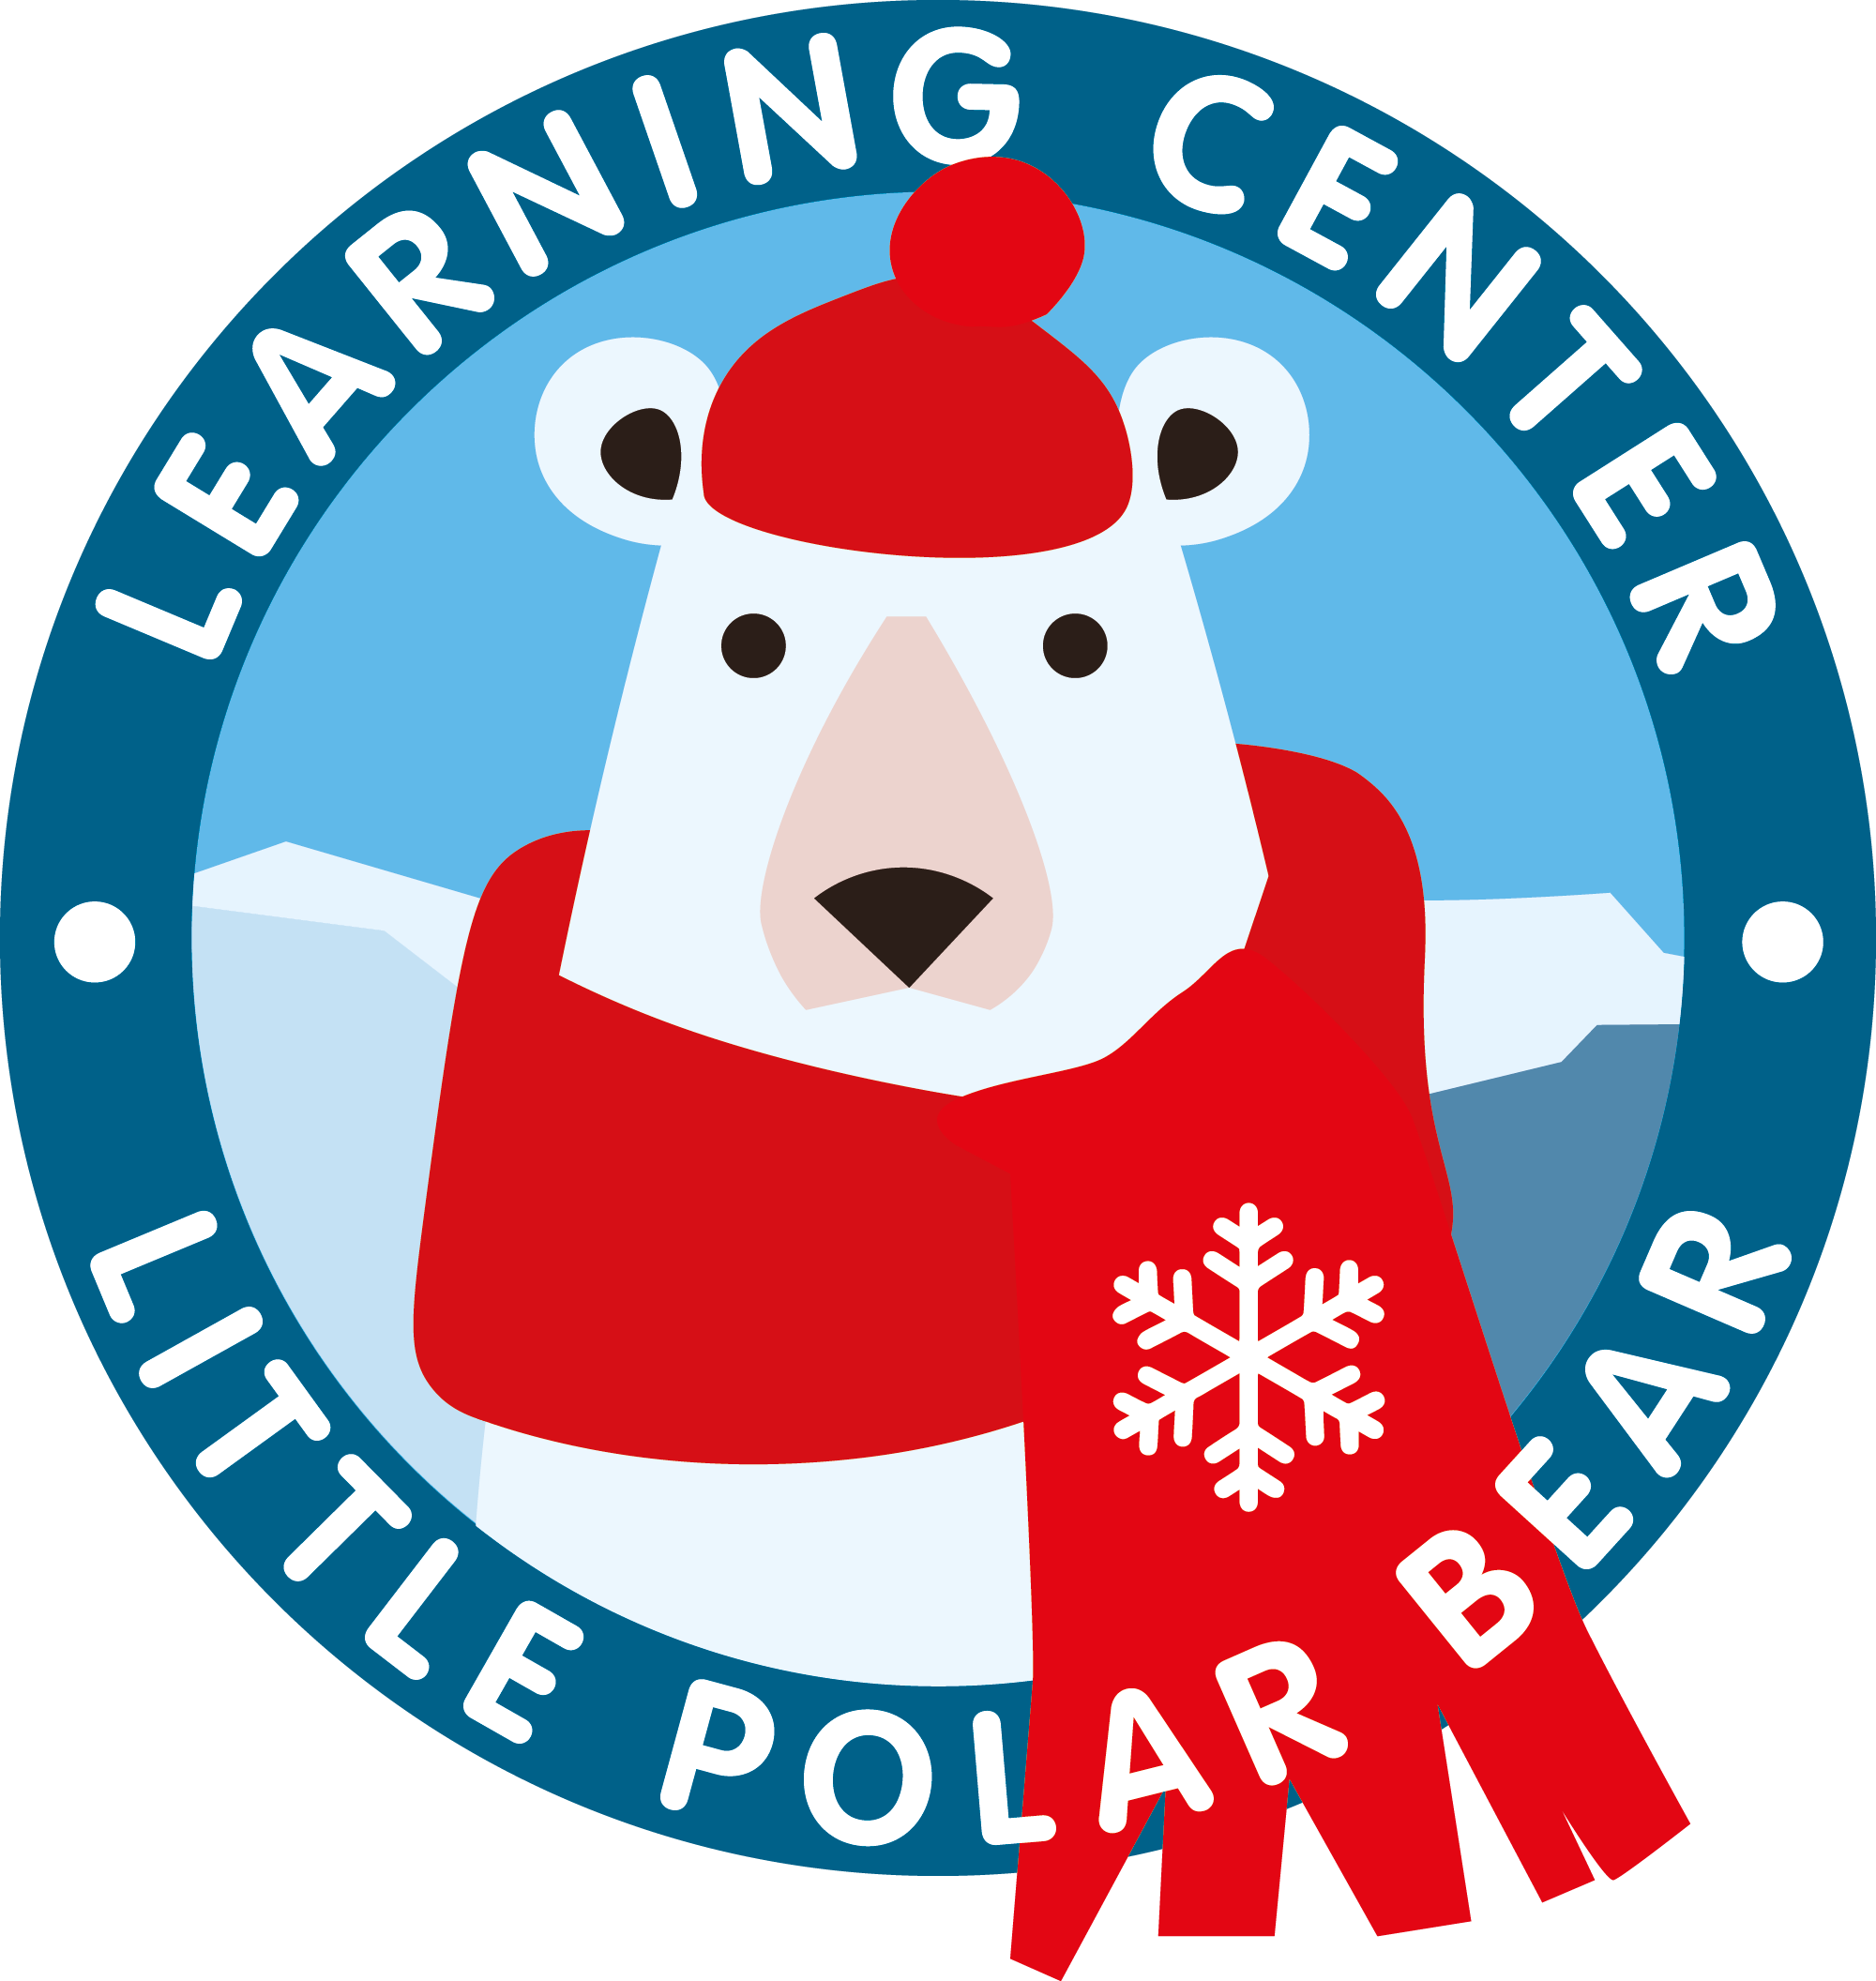 Polar Bear Environmental Learning Center